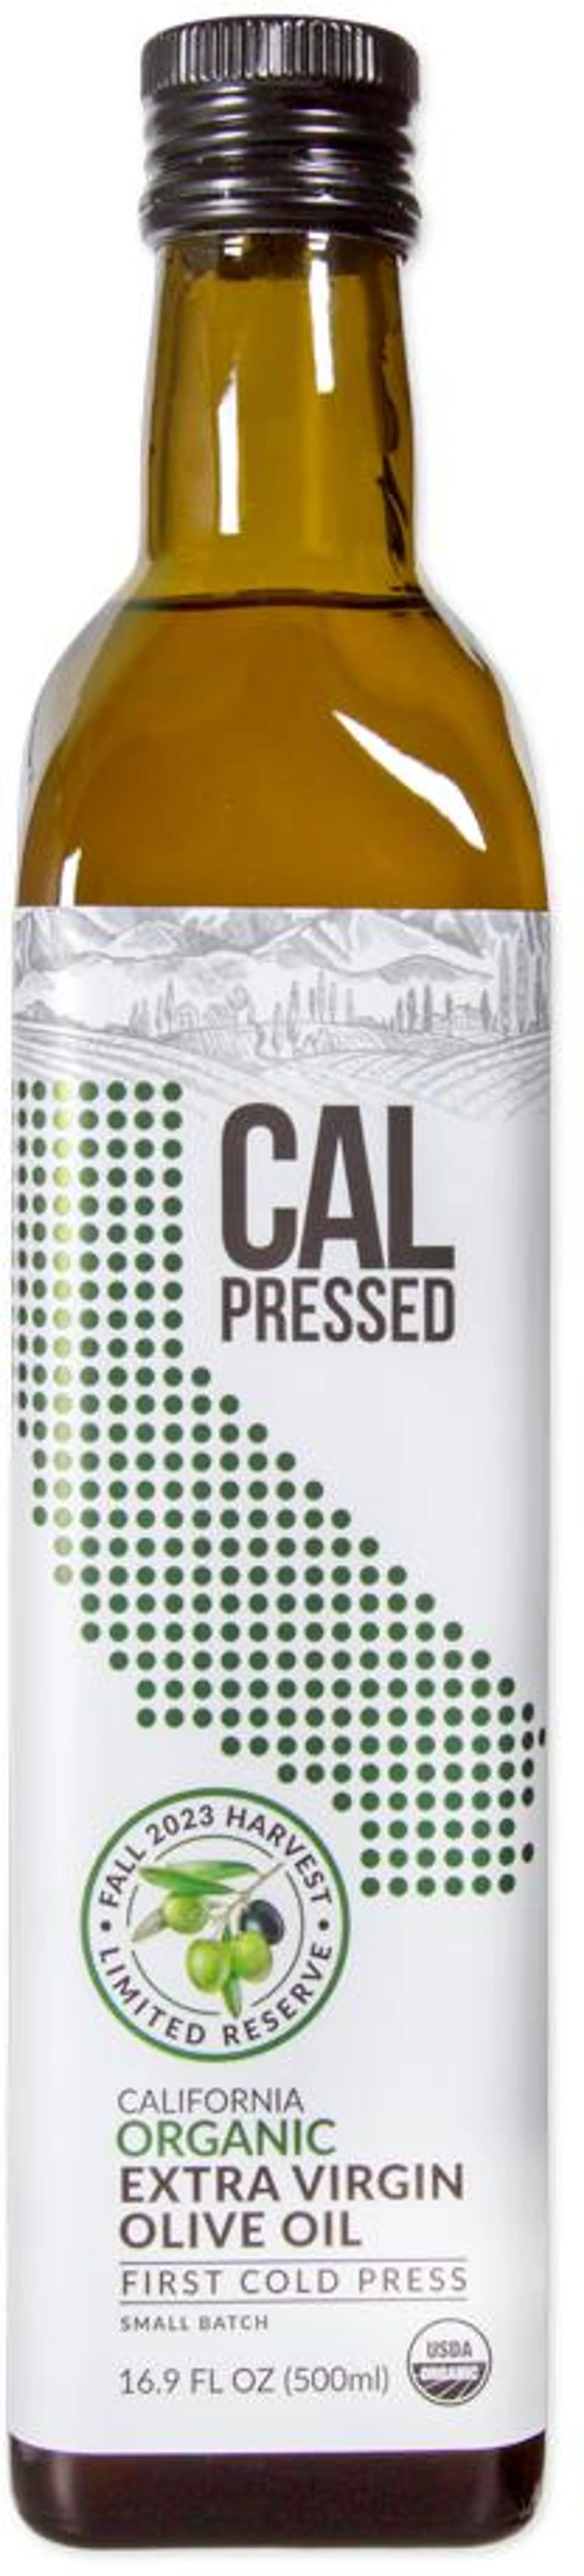 Cal Pressed California Organic Extra Virgin Olive Oil